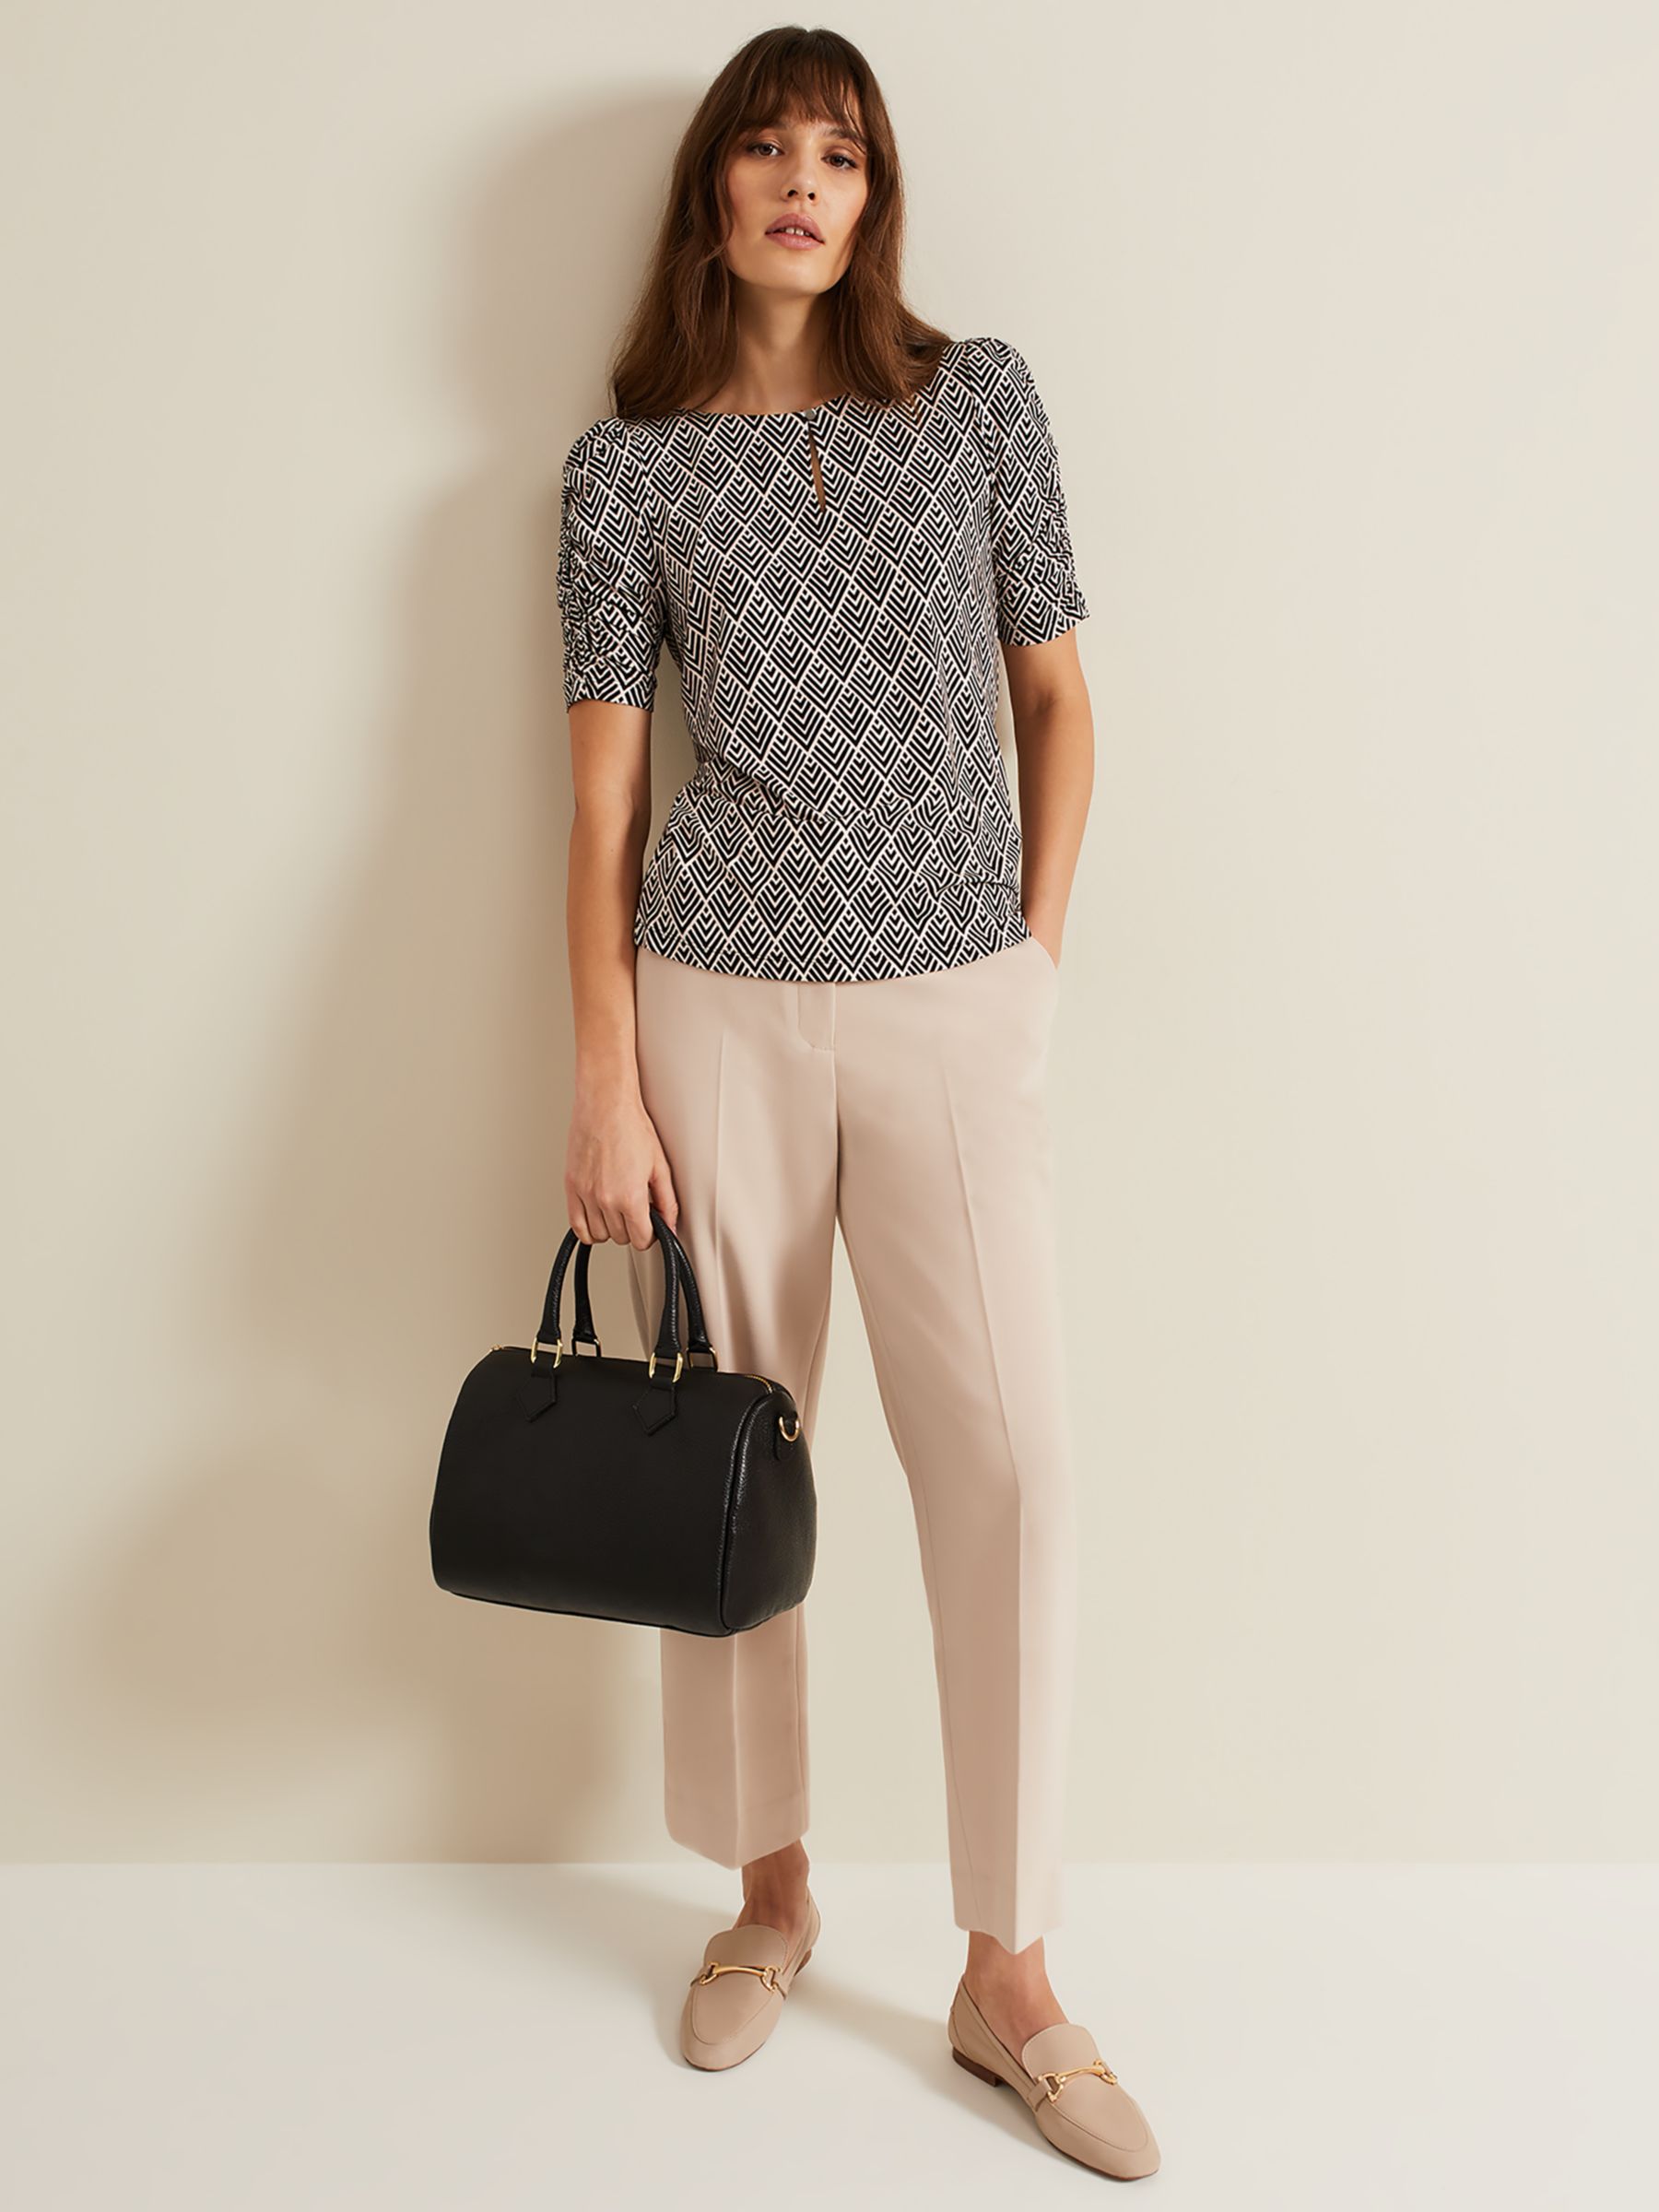 Celine Athletic Knit Striped Bra Top Black Cream – The Luxury Shopper